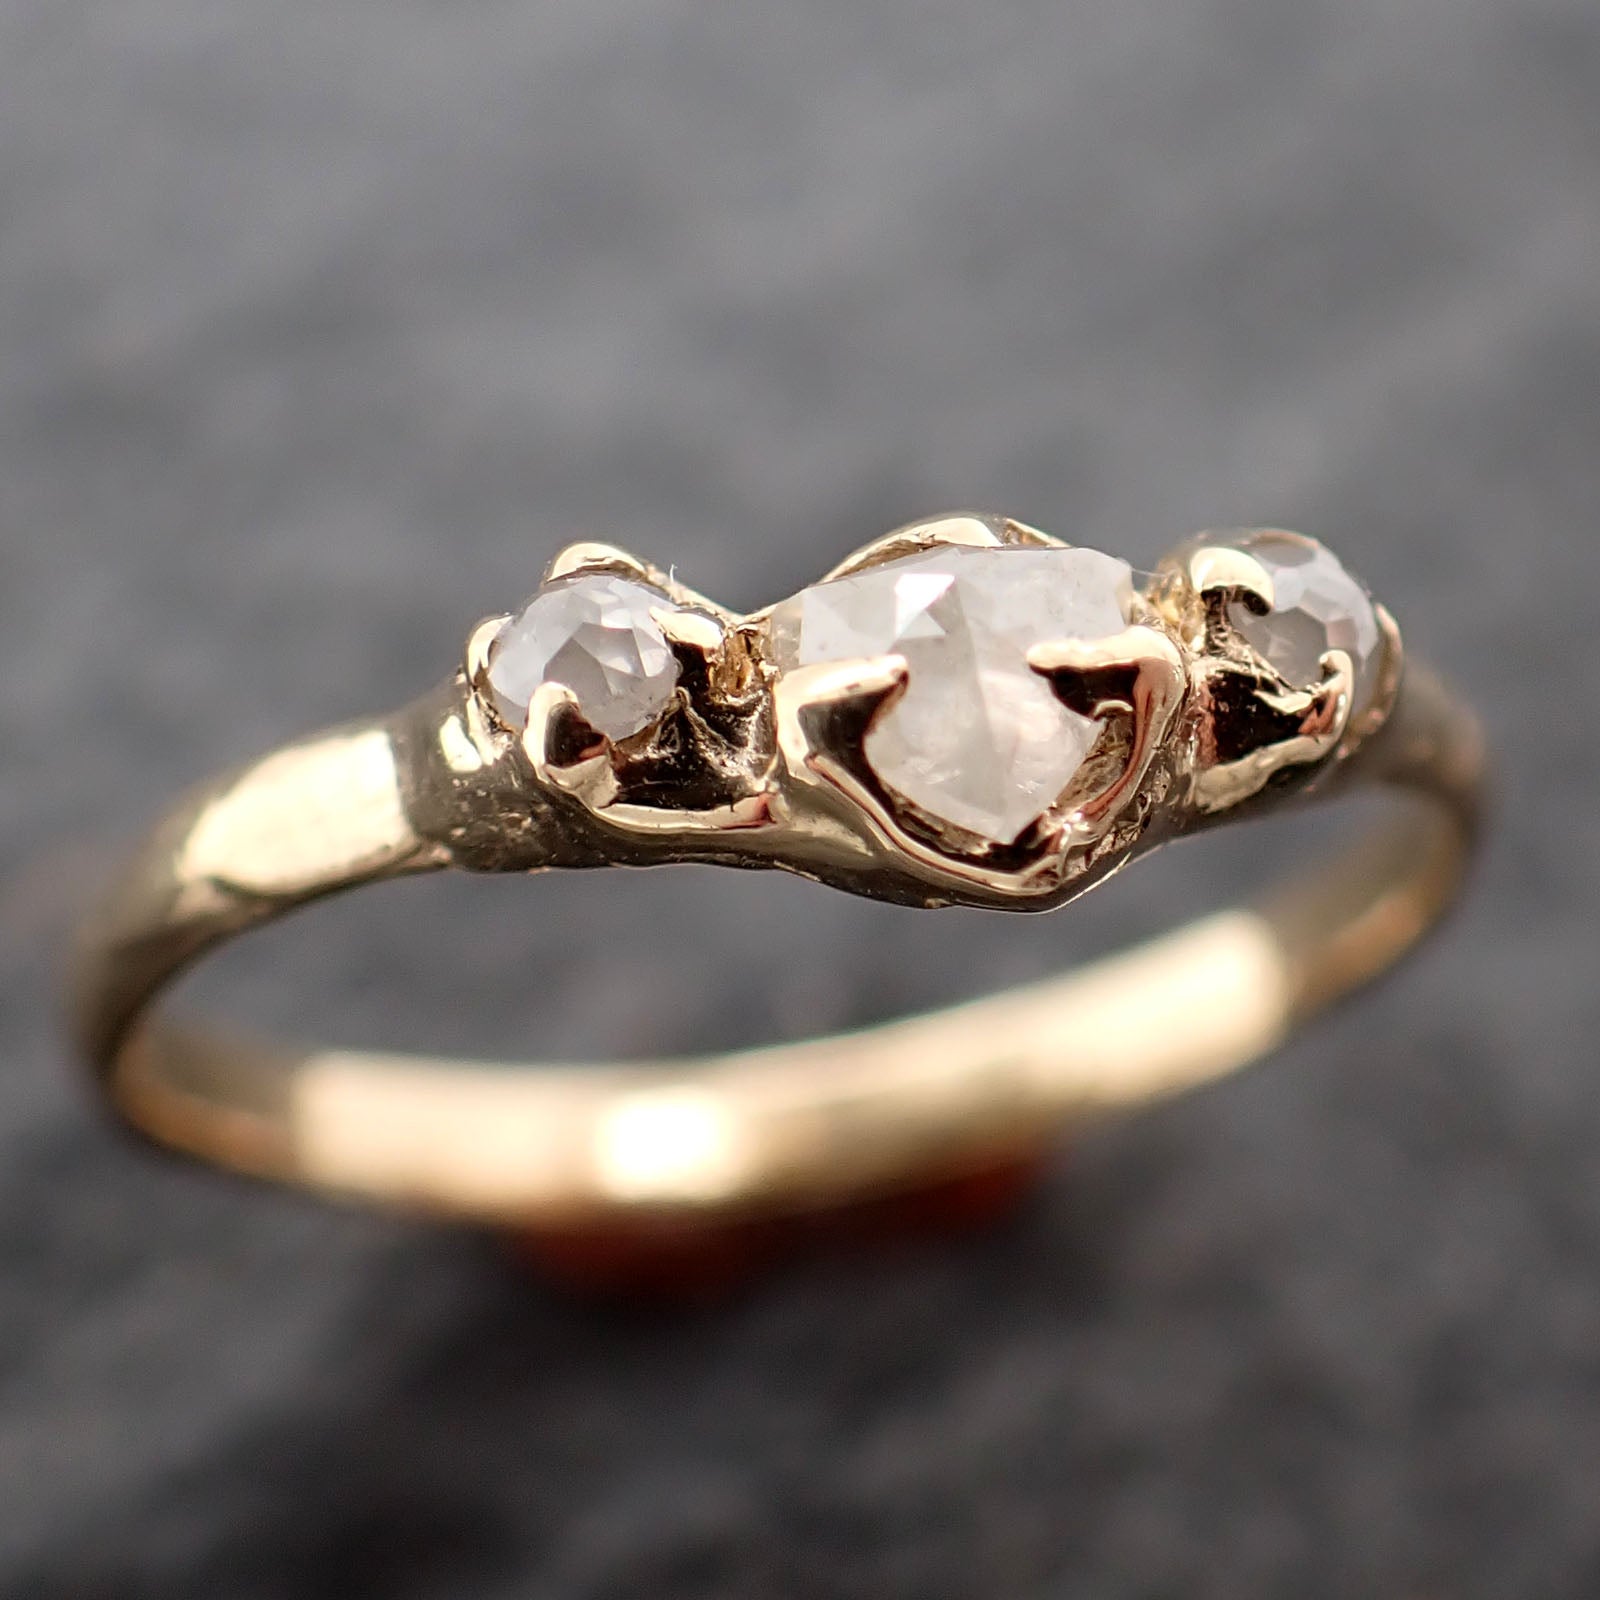 Fancy cut white Diamond Engagement 18k Yellow Gold Multi stone Wedding Ring Stacking byAngeline 2651